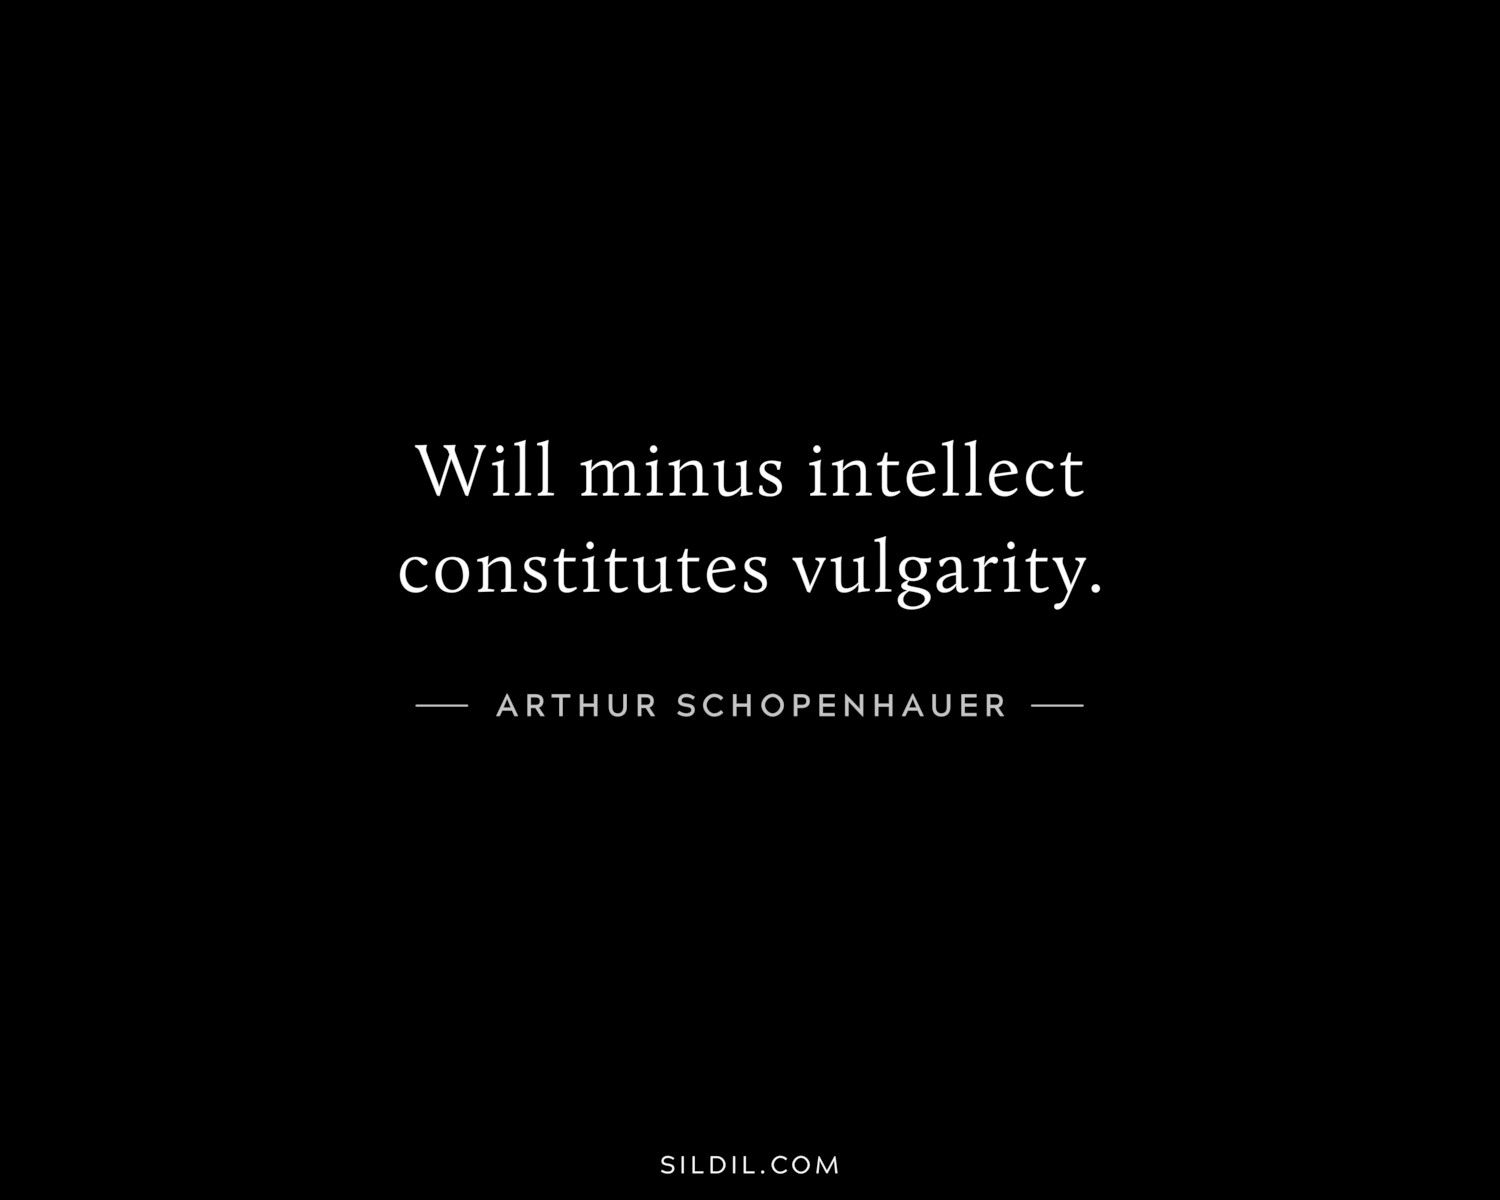 Will minus intellect constitutes vulgarity.